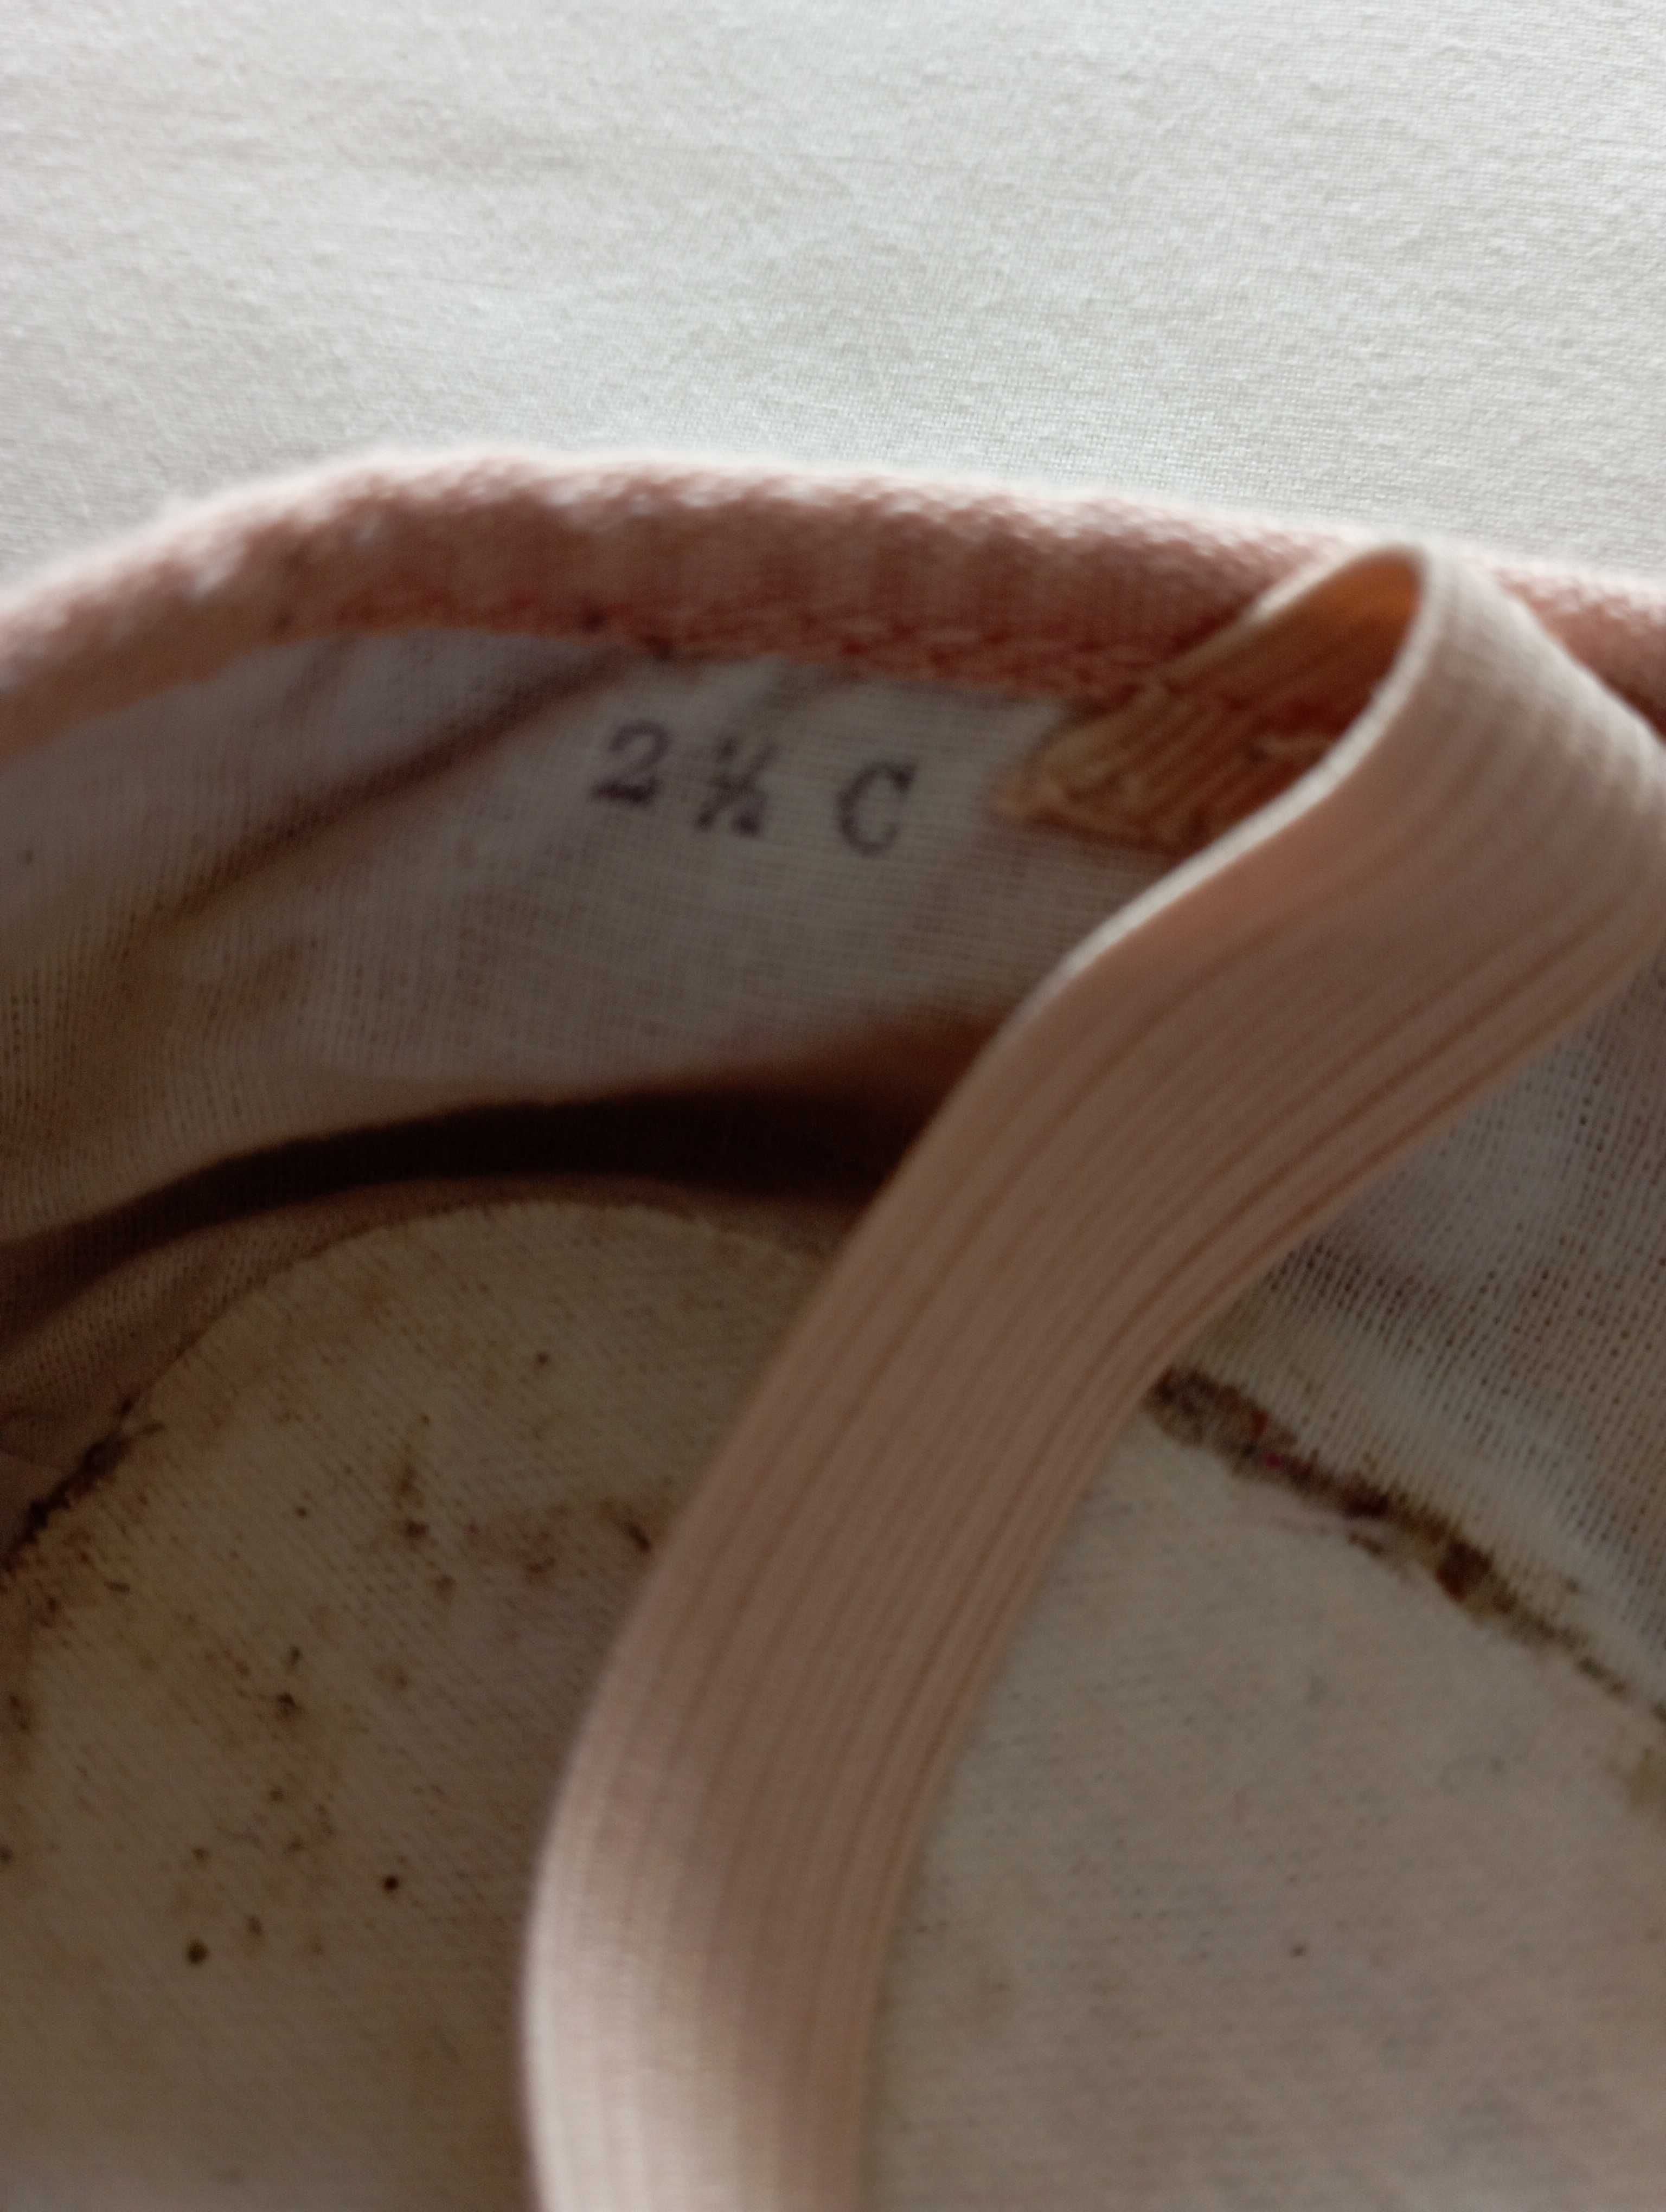 Sapatos ballet, tam. 2 1/2 C